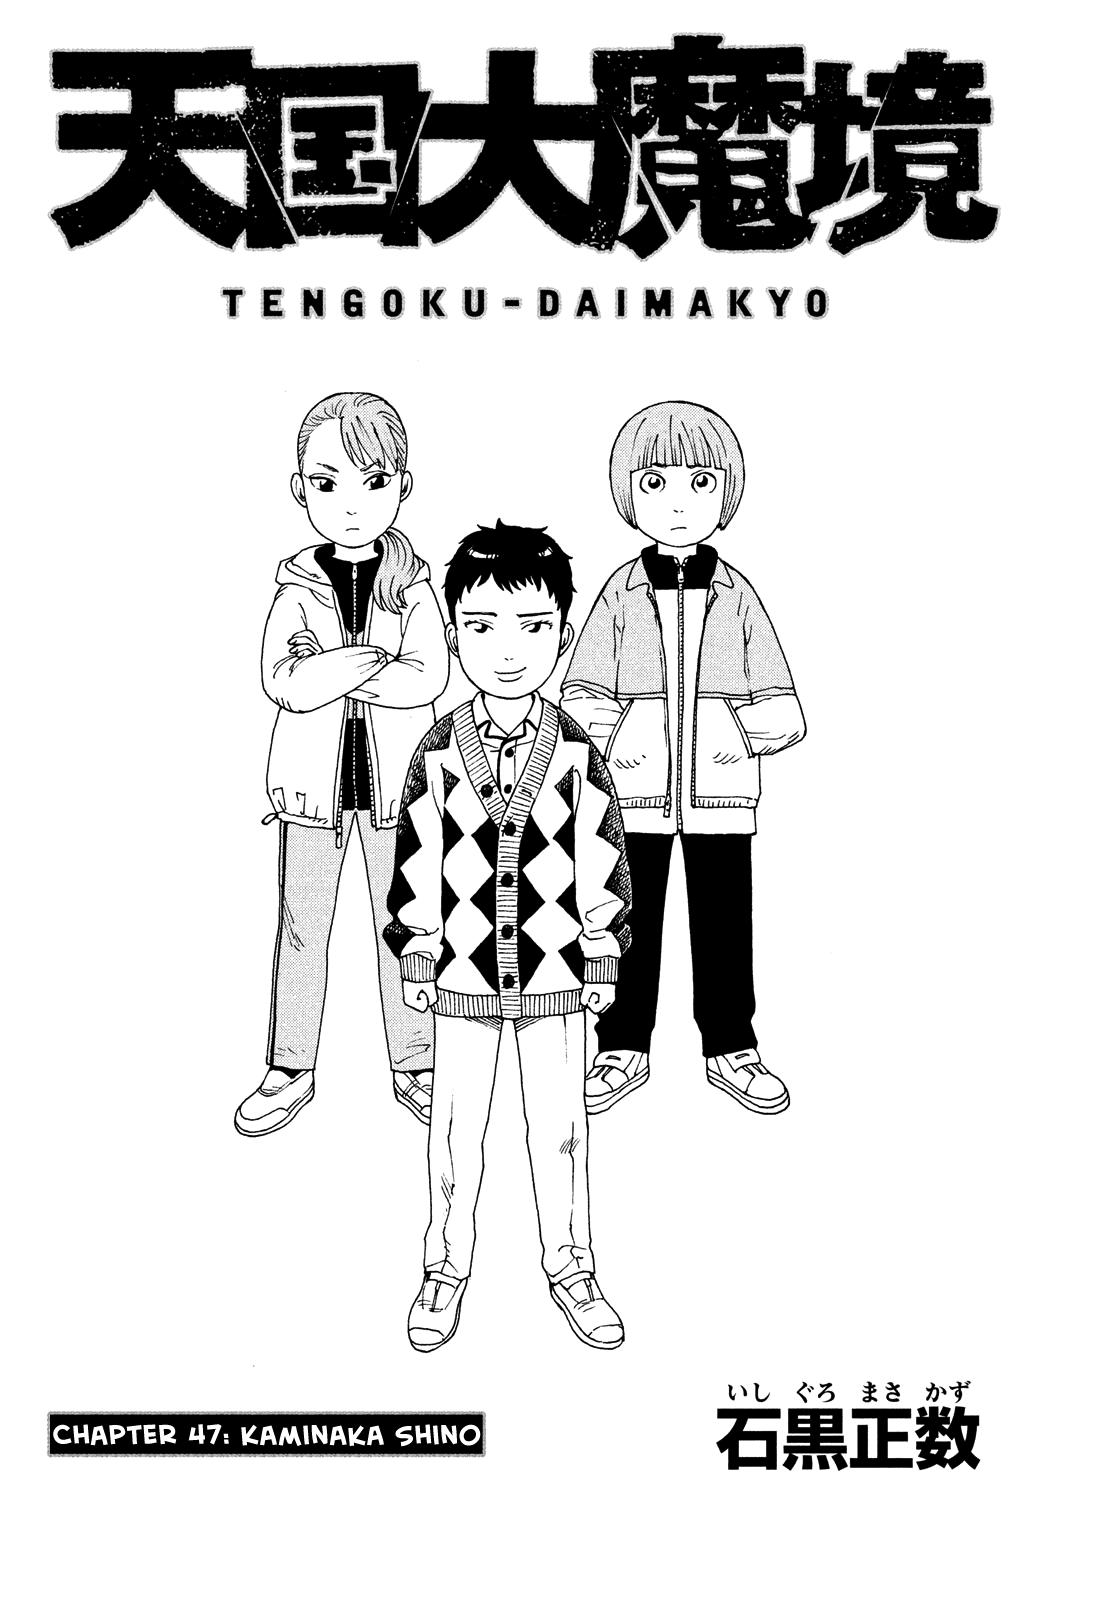 Read Tengoku Daimakyou Chapter 38: Dream Of Hell ➀ - Manganelo